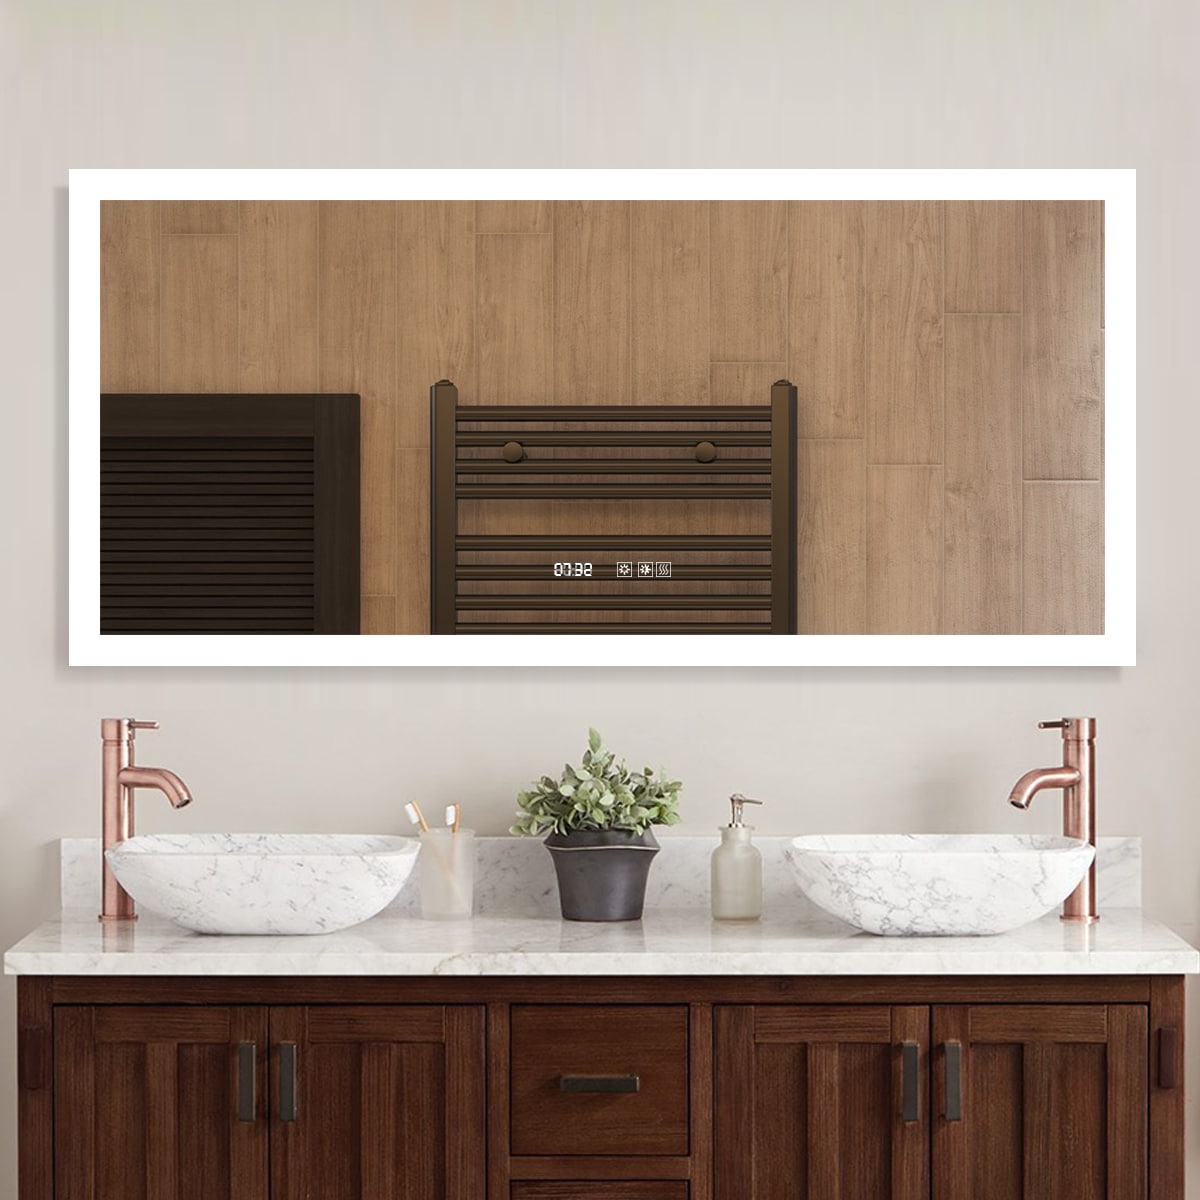 Wall Bathroom Mirror with Shelf Hooks Sturdy Metal Frame for Bedroom Living  Room